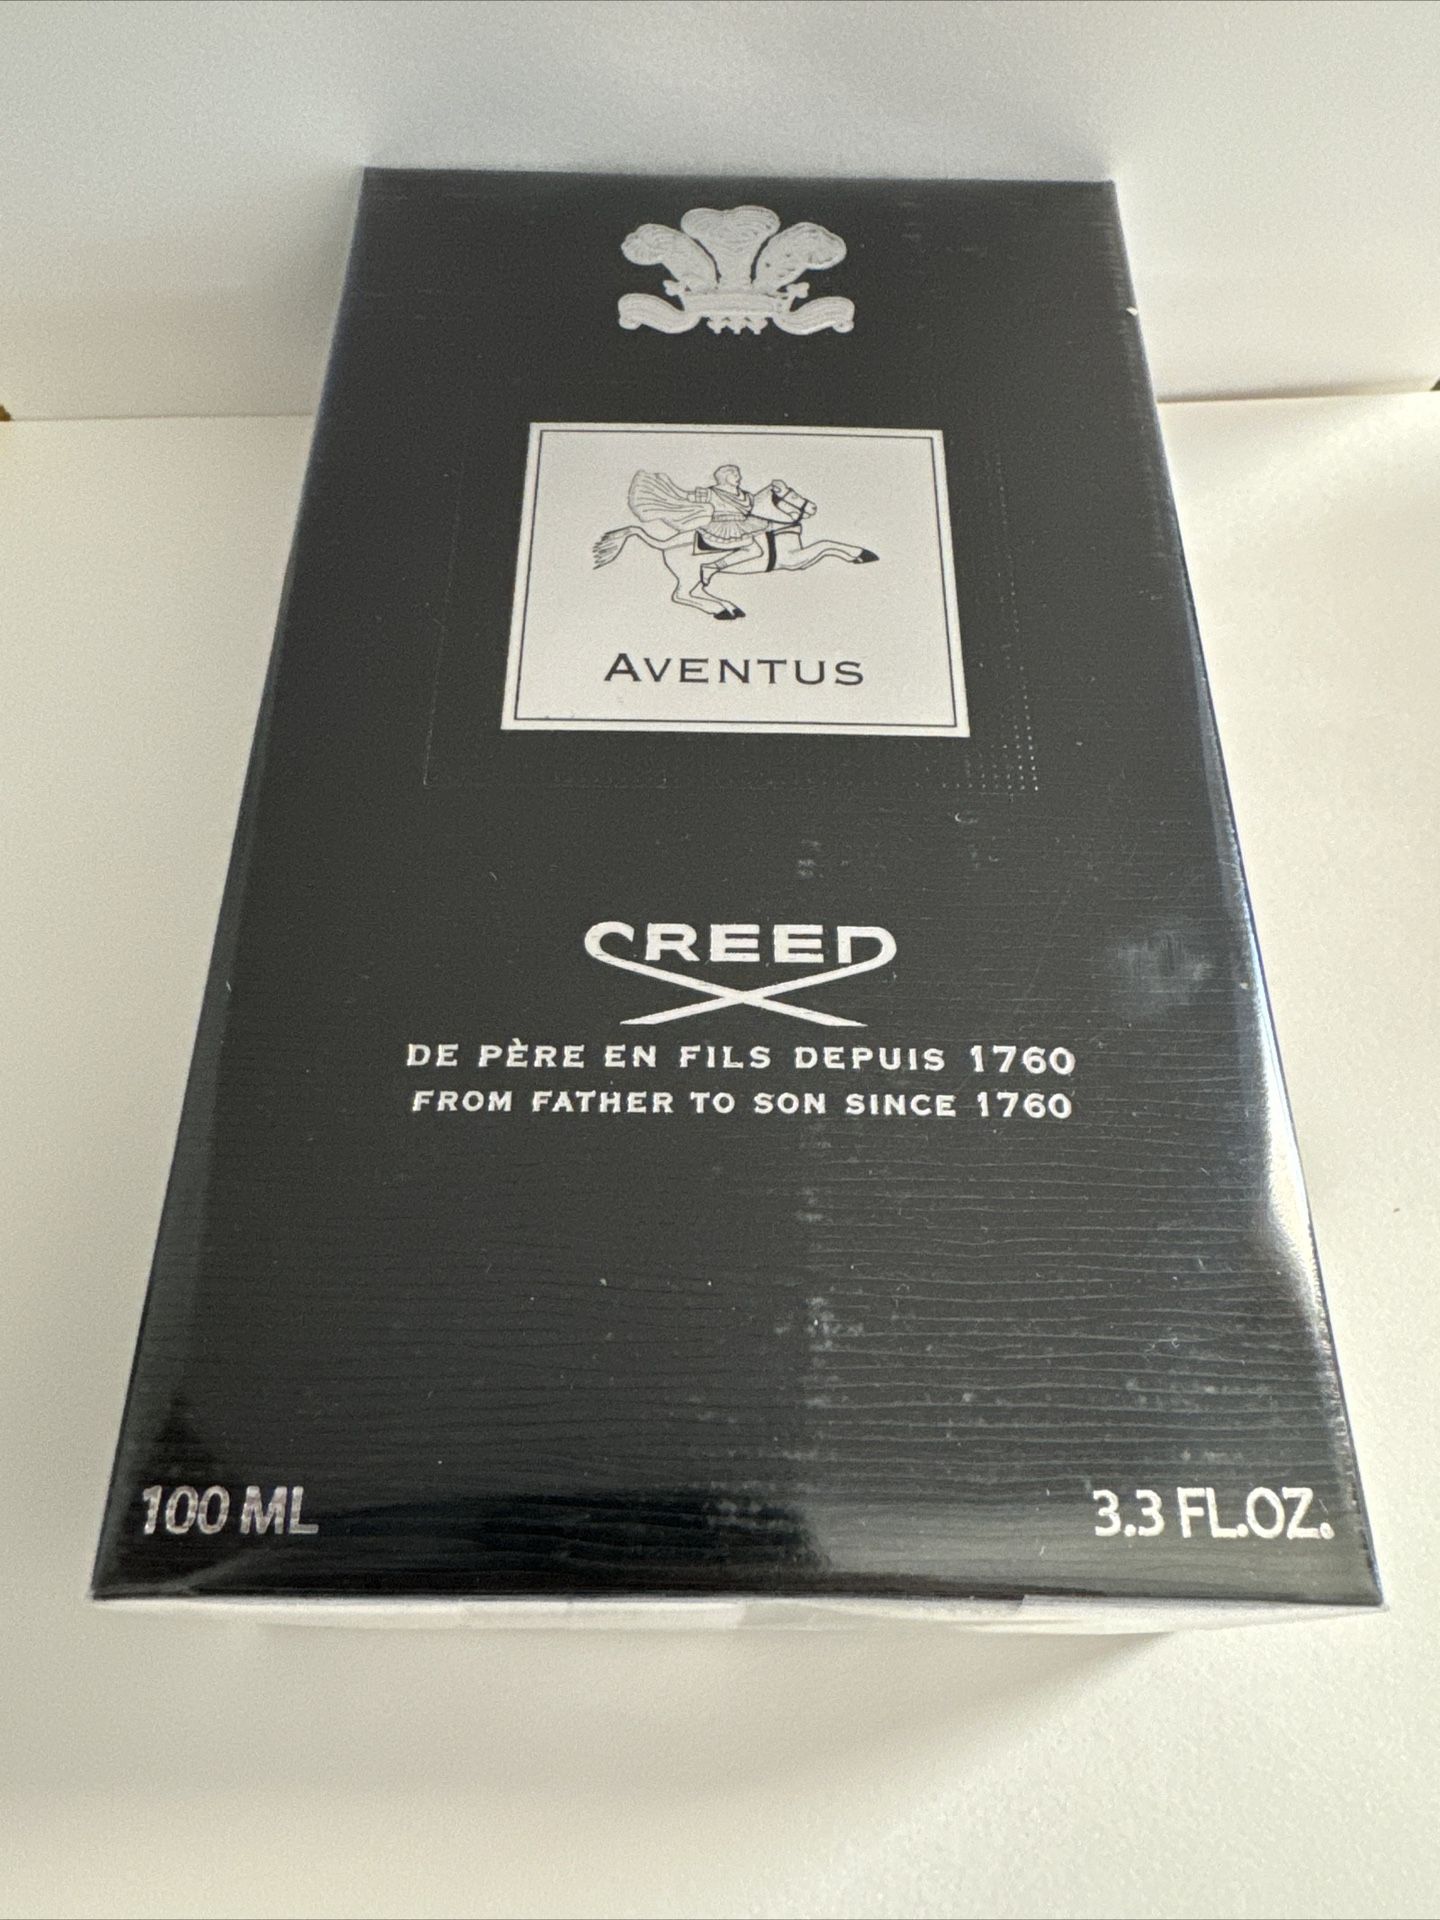 Aventus by Creed 3.3 Fl oz 100ml Eau De Perfum